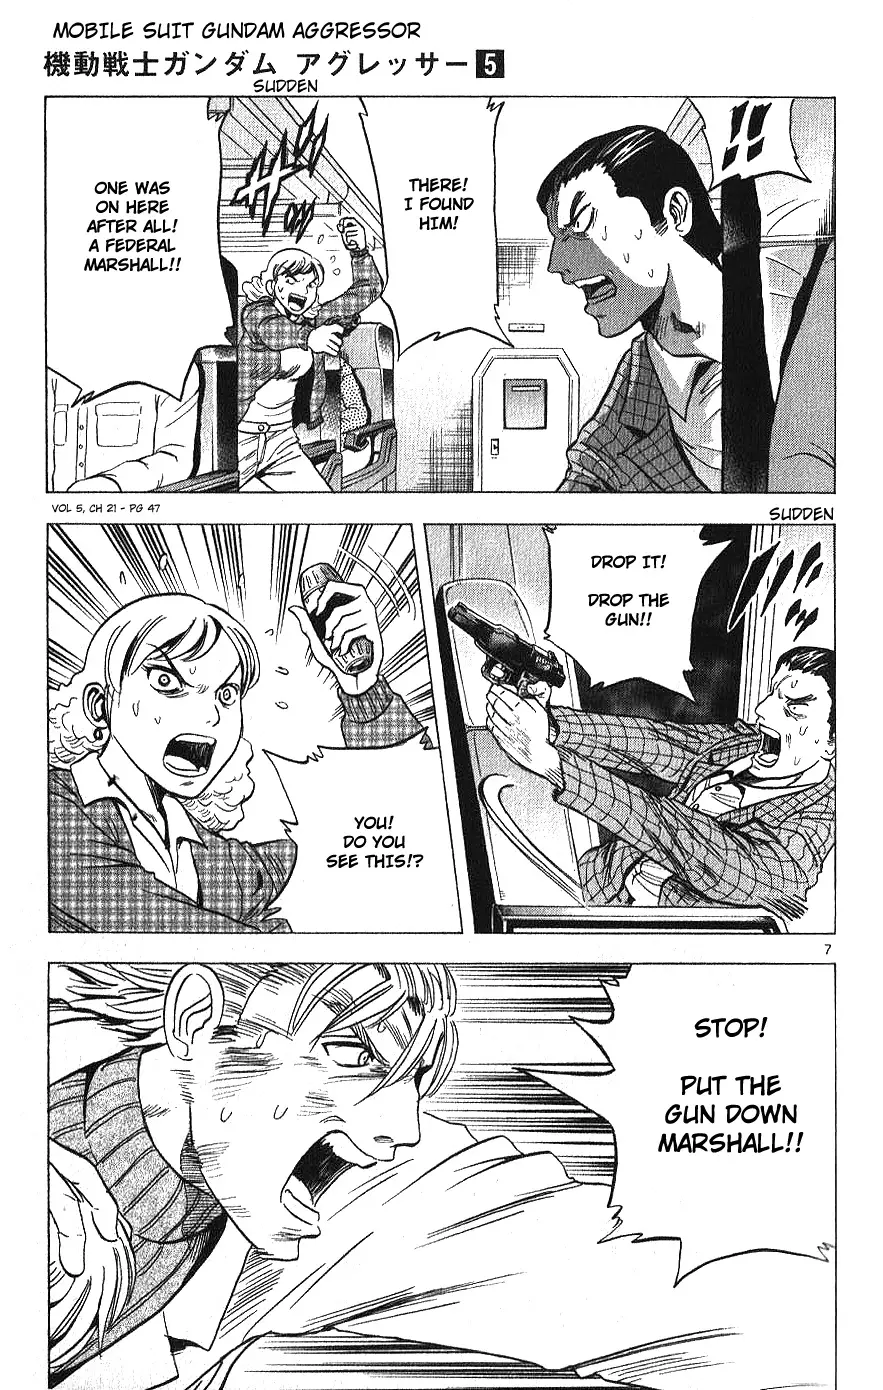 Mobile Suit Gundam Aggressor - 21 page 7-44c0346b